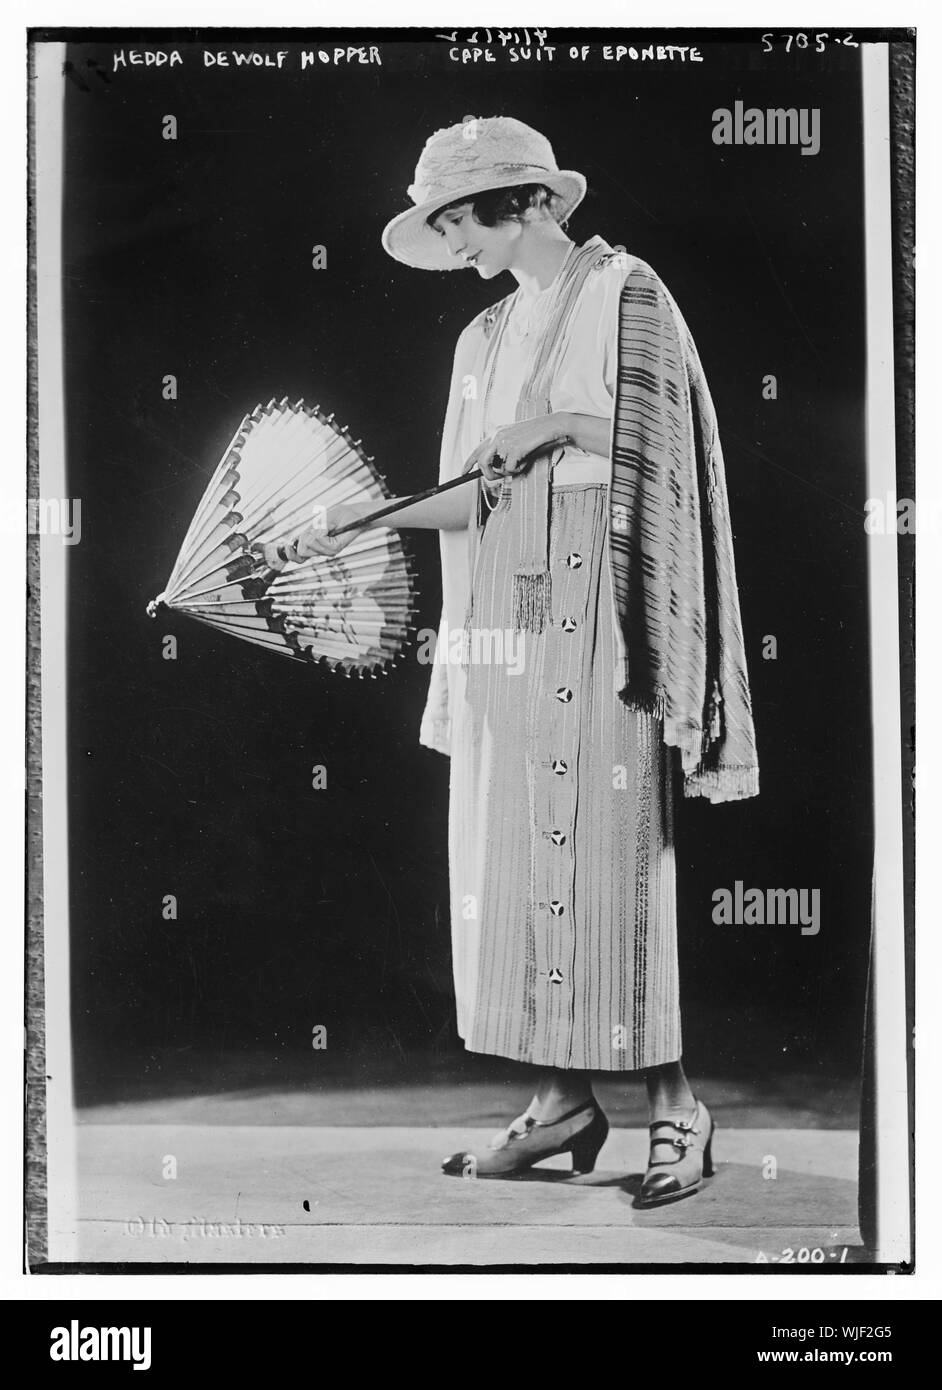 Hedda DeWolf Hopper, cape suit of eponette Stock Photo